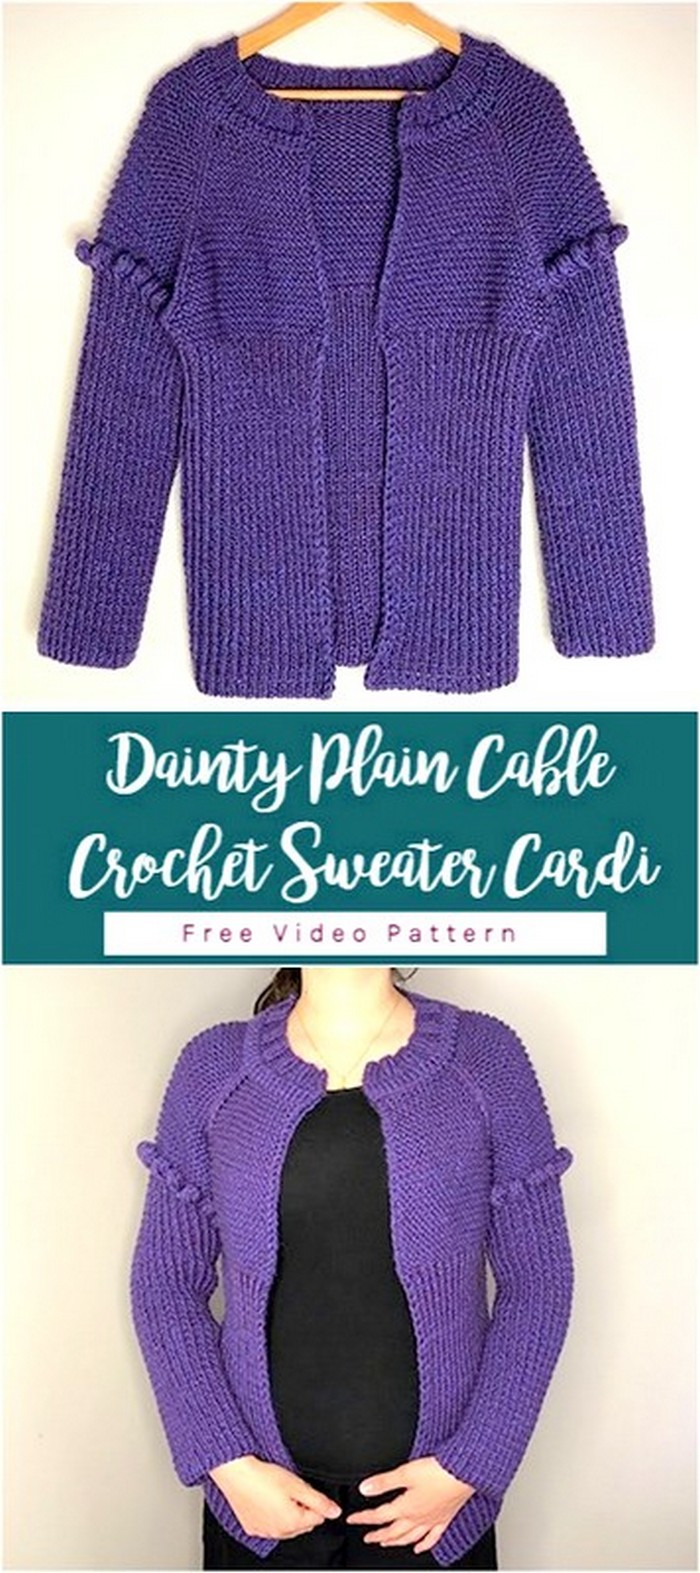 Dainty Plain Cable Crochet Sweater Cardi